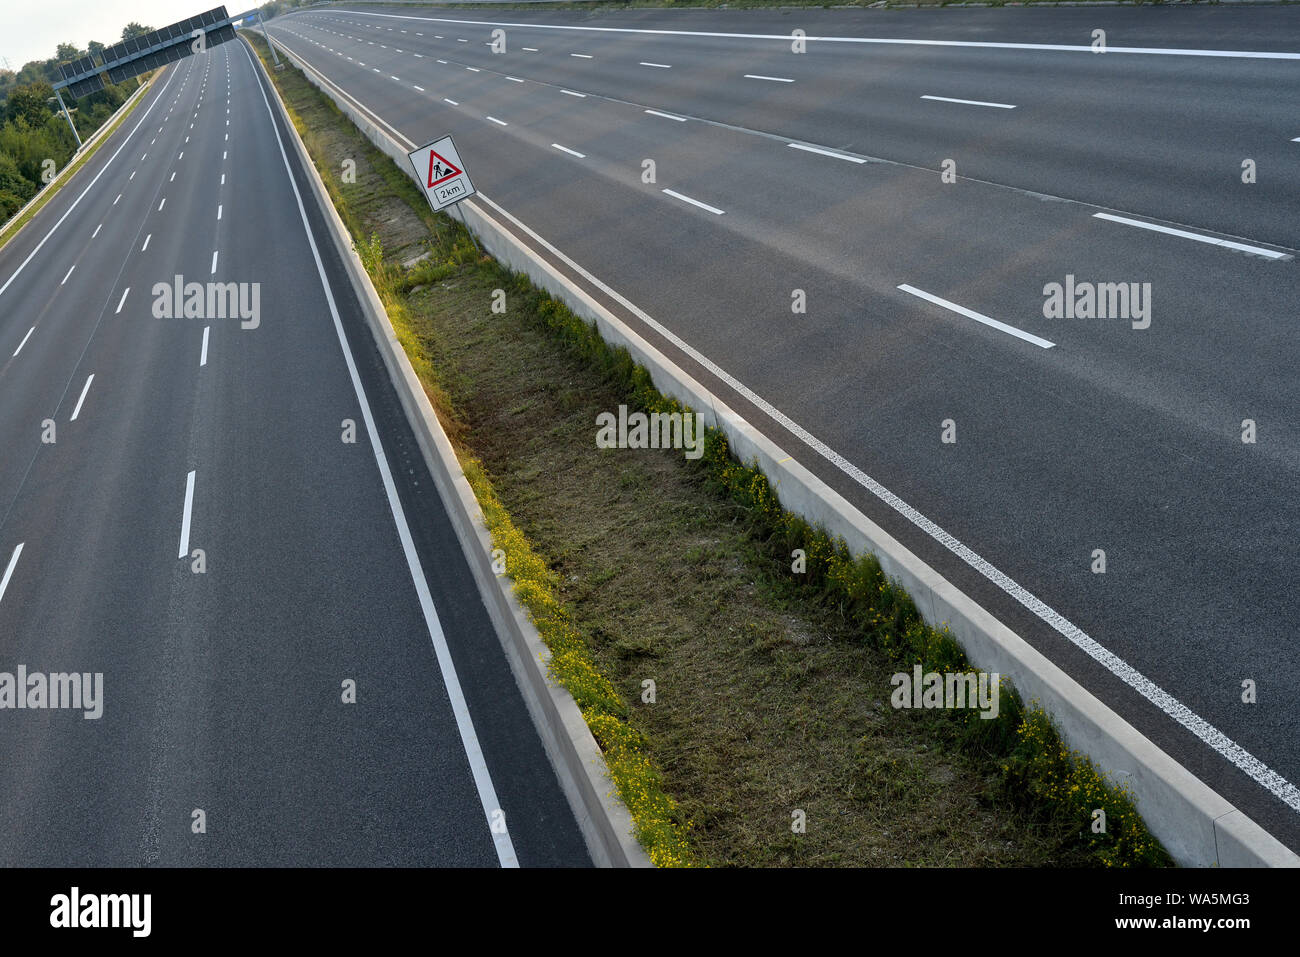 komplett geschlossene 8-spurige Autobahn wegen Straßenbauarbeiten Stockfoto